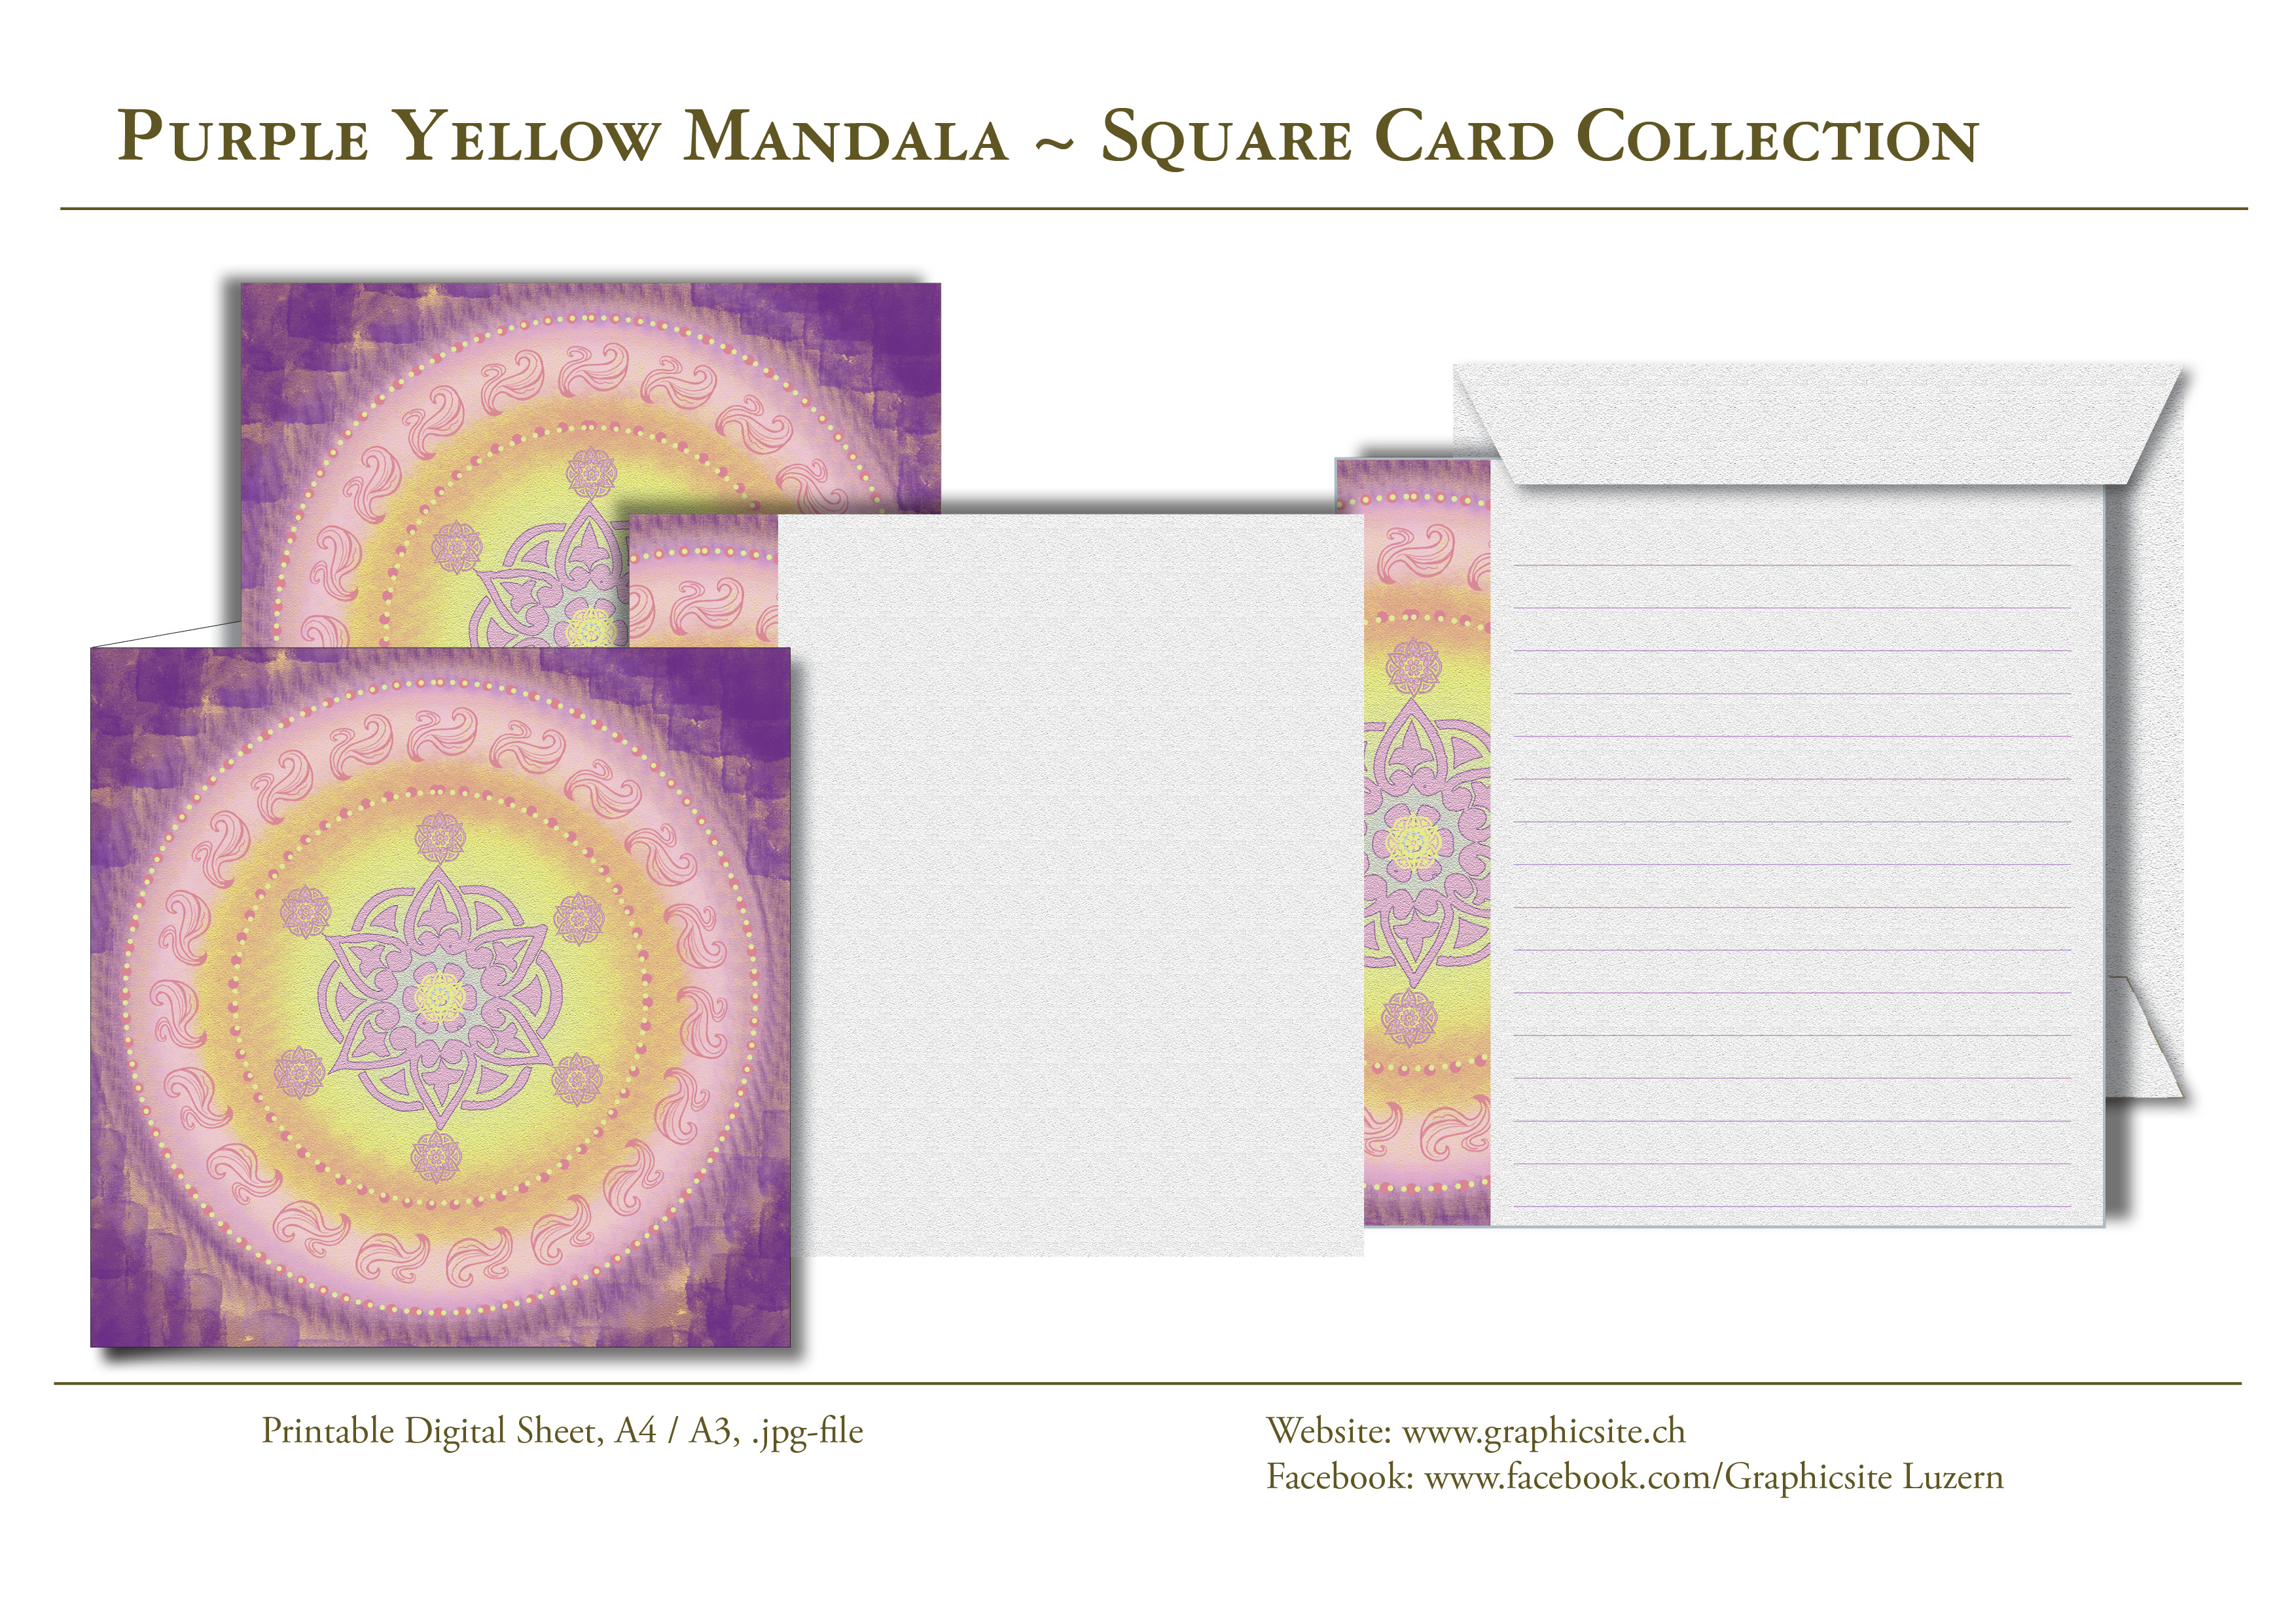 Printable Digital Sheets - Square Card Collection - Mandala, Purple, Yellow, Greeting Cards, Notecards,